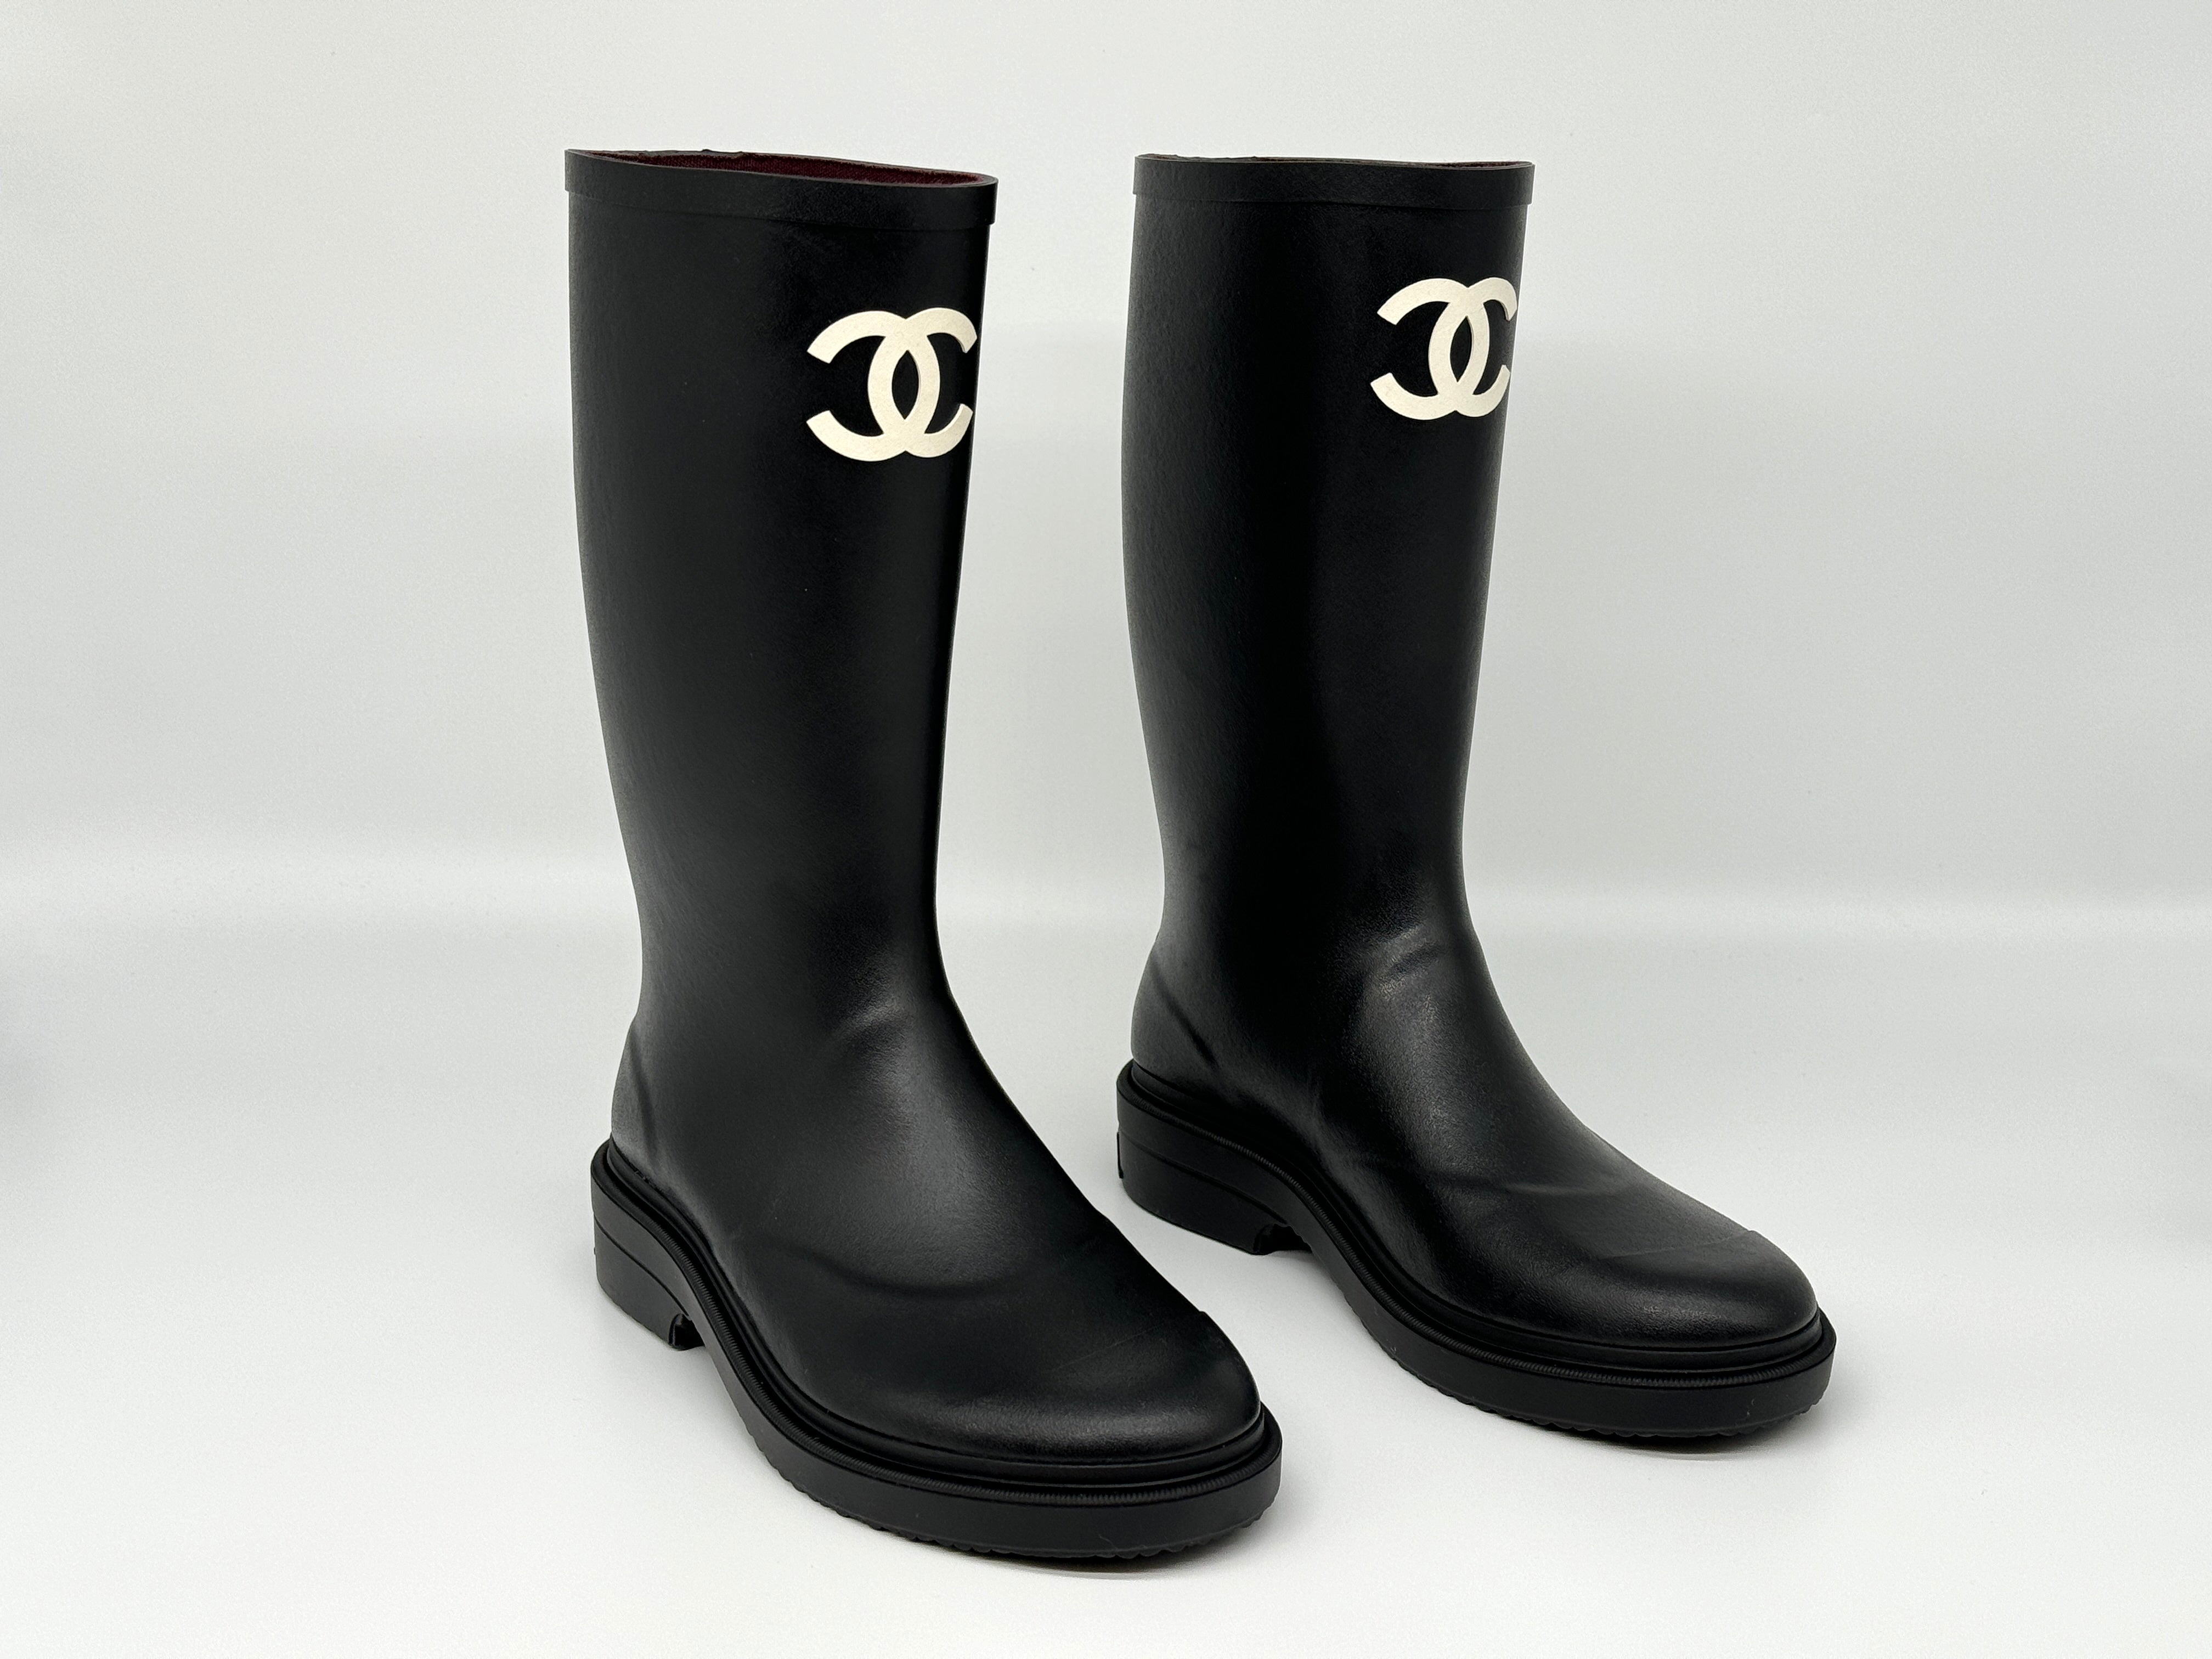 *HOT* Chanel Rubber Rain Boots